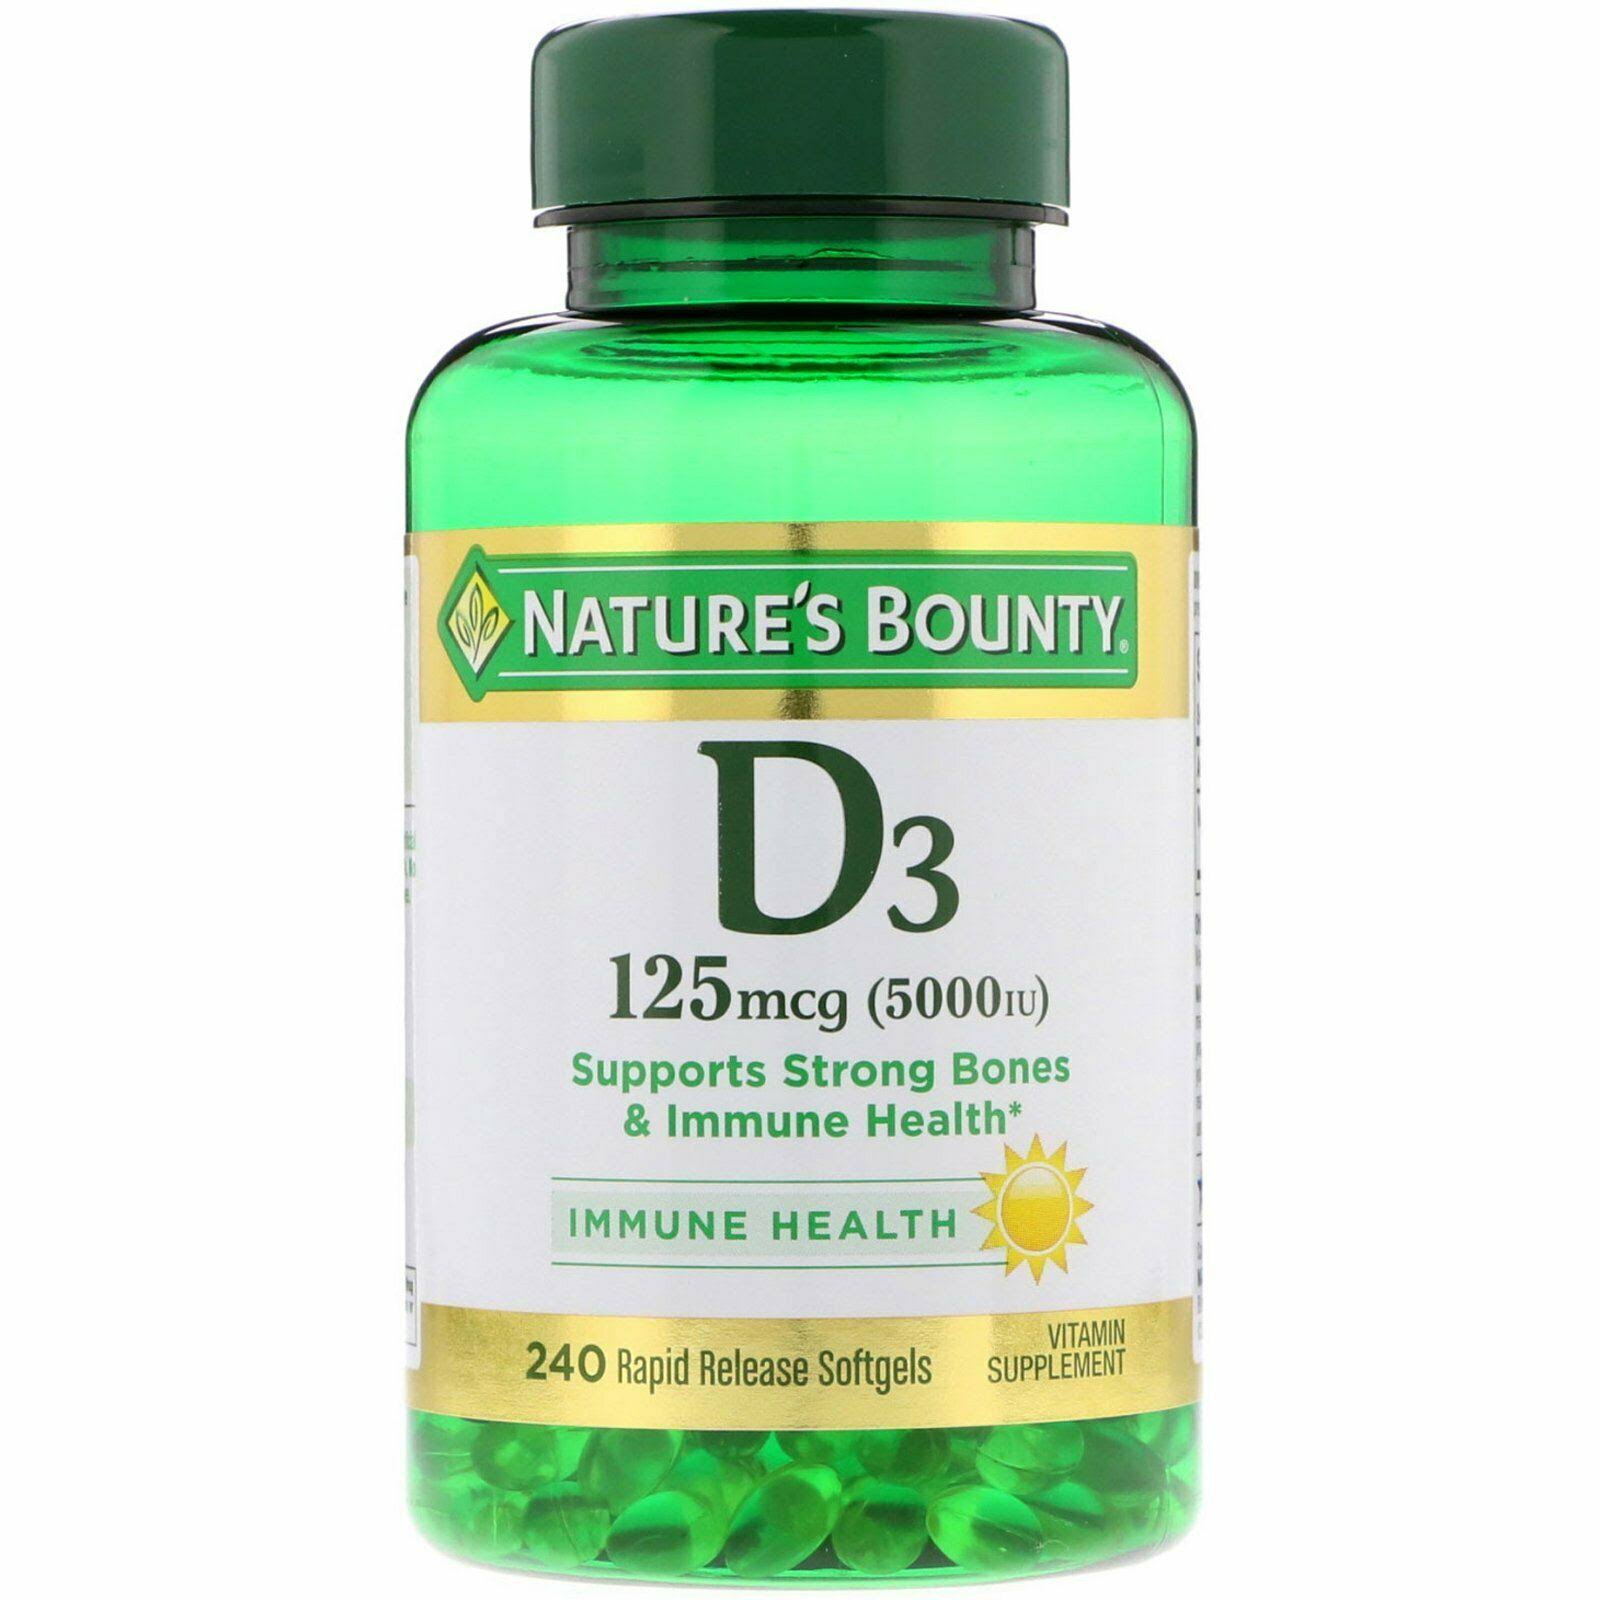 Nature's Bounty D3 Rapid Release Immune Health Dietary Supplement - 5000IU, 240ct